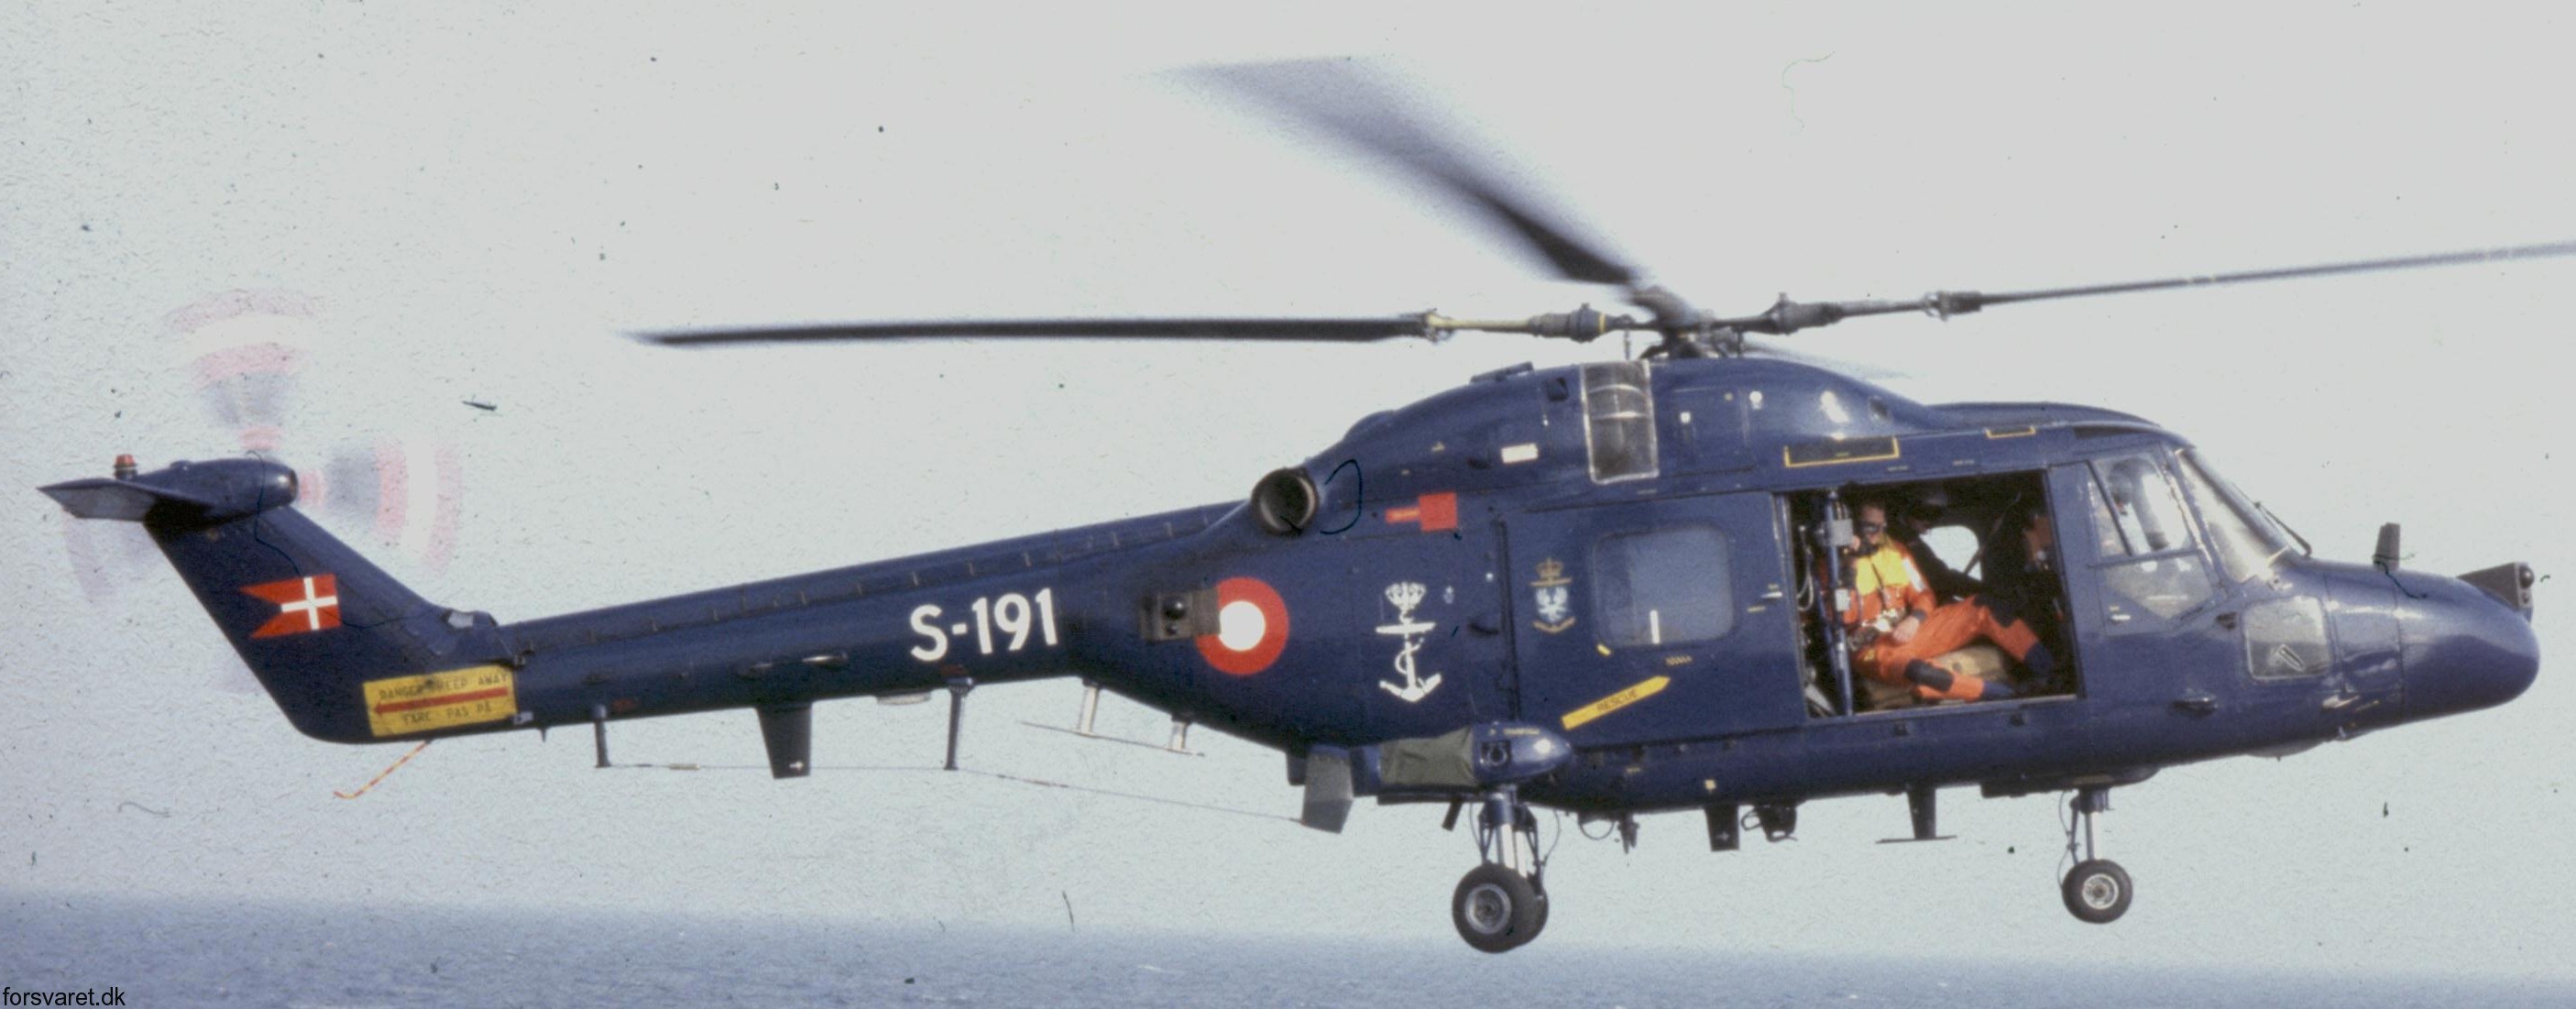 lynx mk.80 mk.90b helicopter westland royal danish navy air force kongelige danske marine flyvevabnet s-191 15